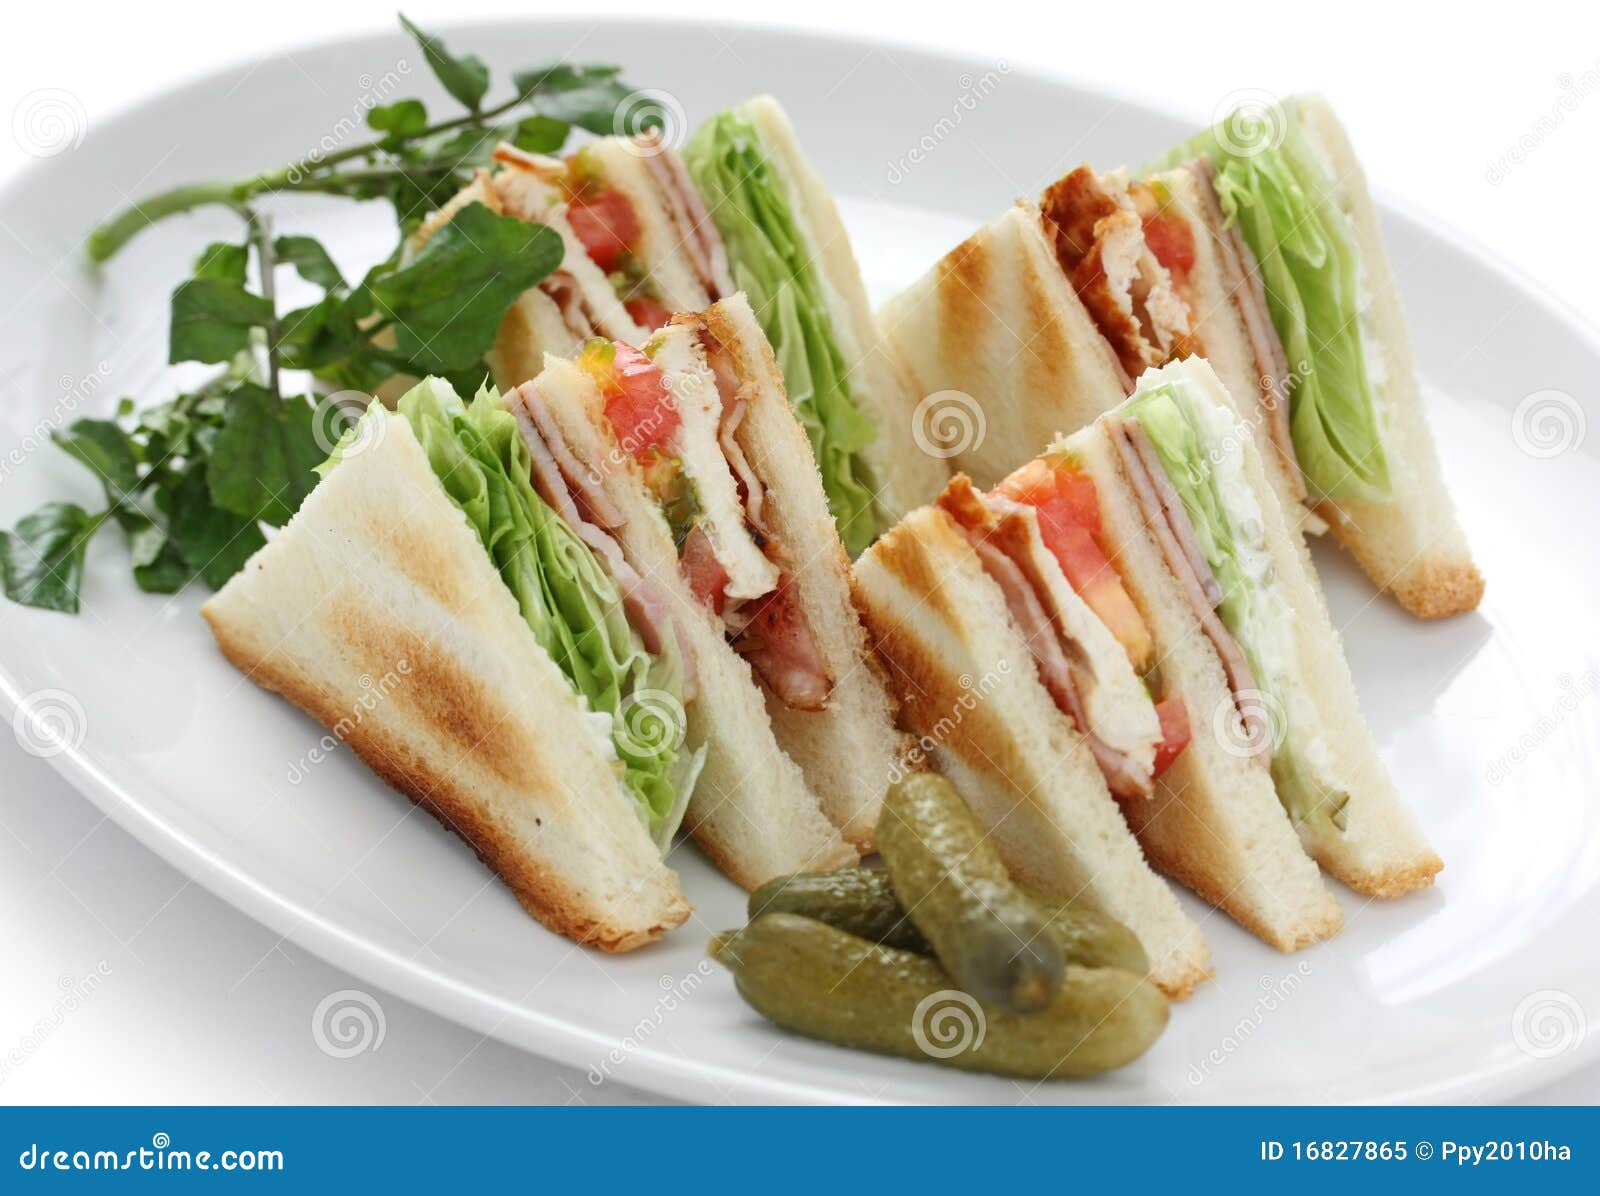 club sandwich , clubhouse sandwich